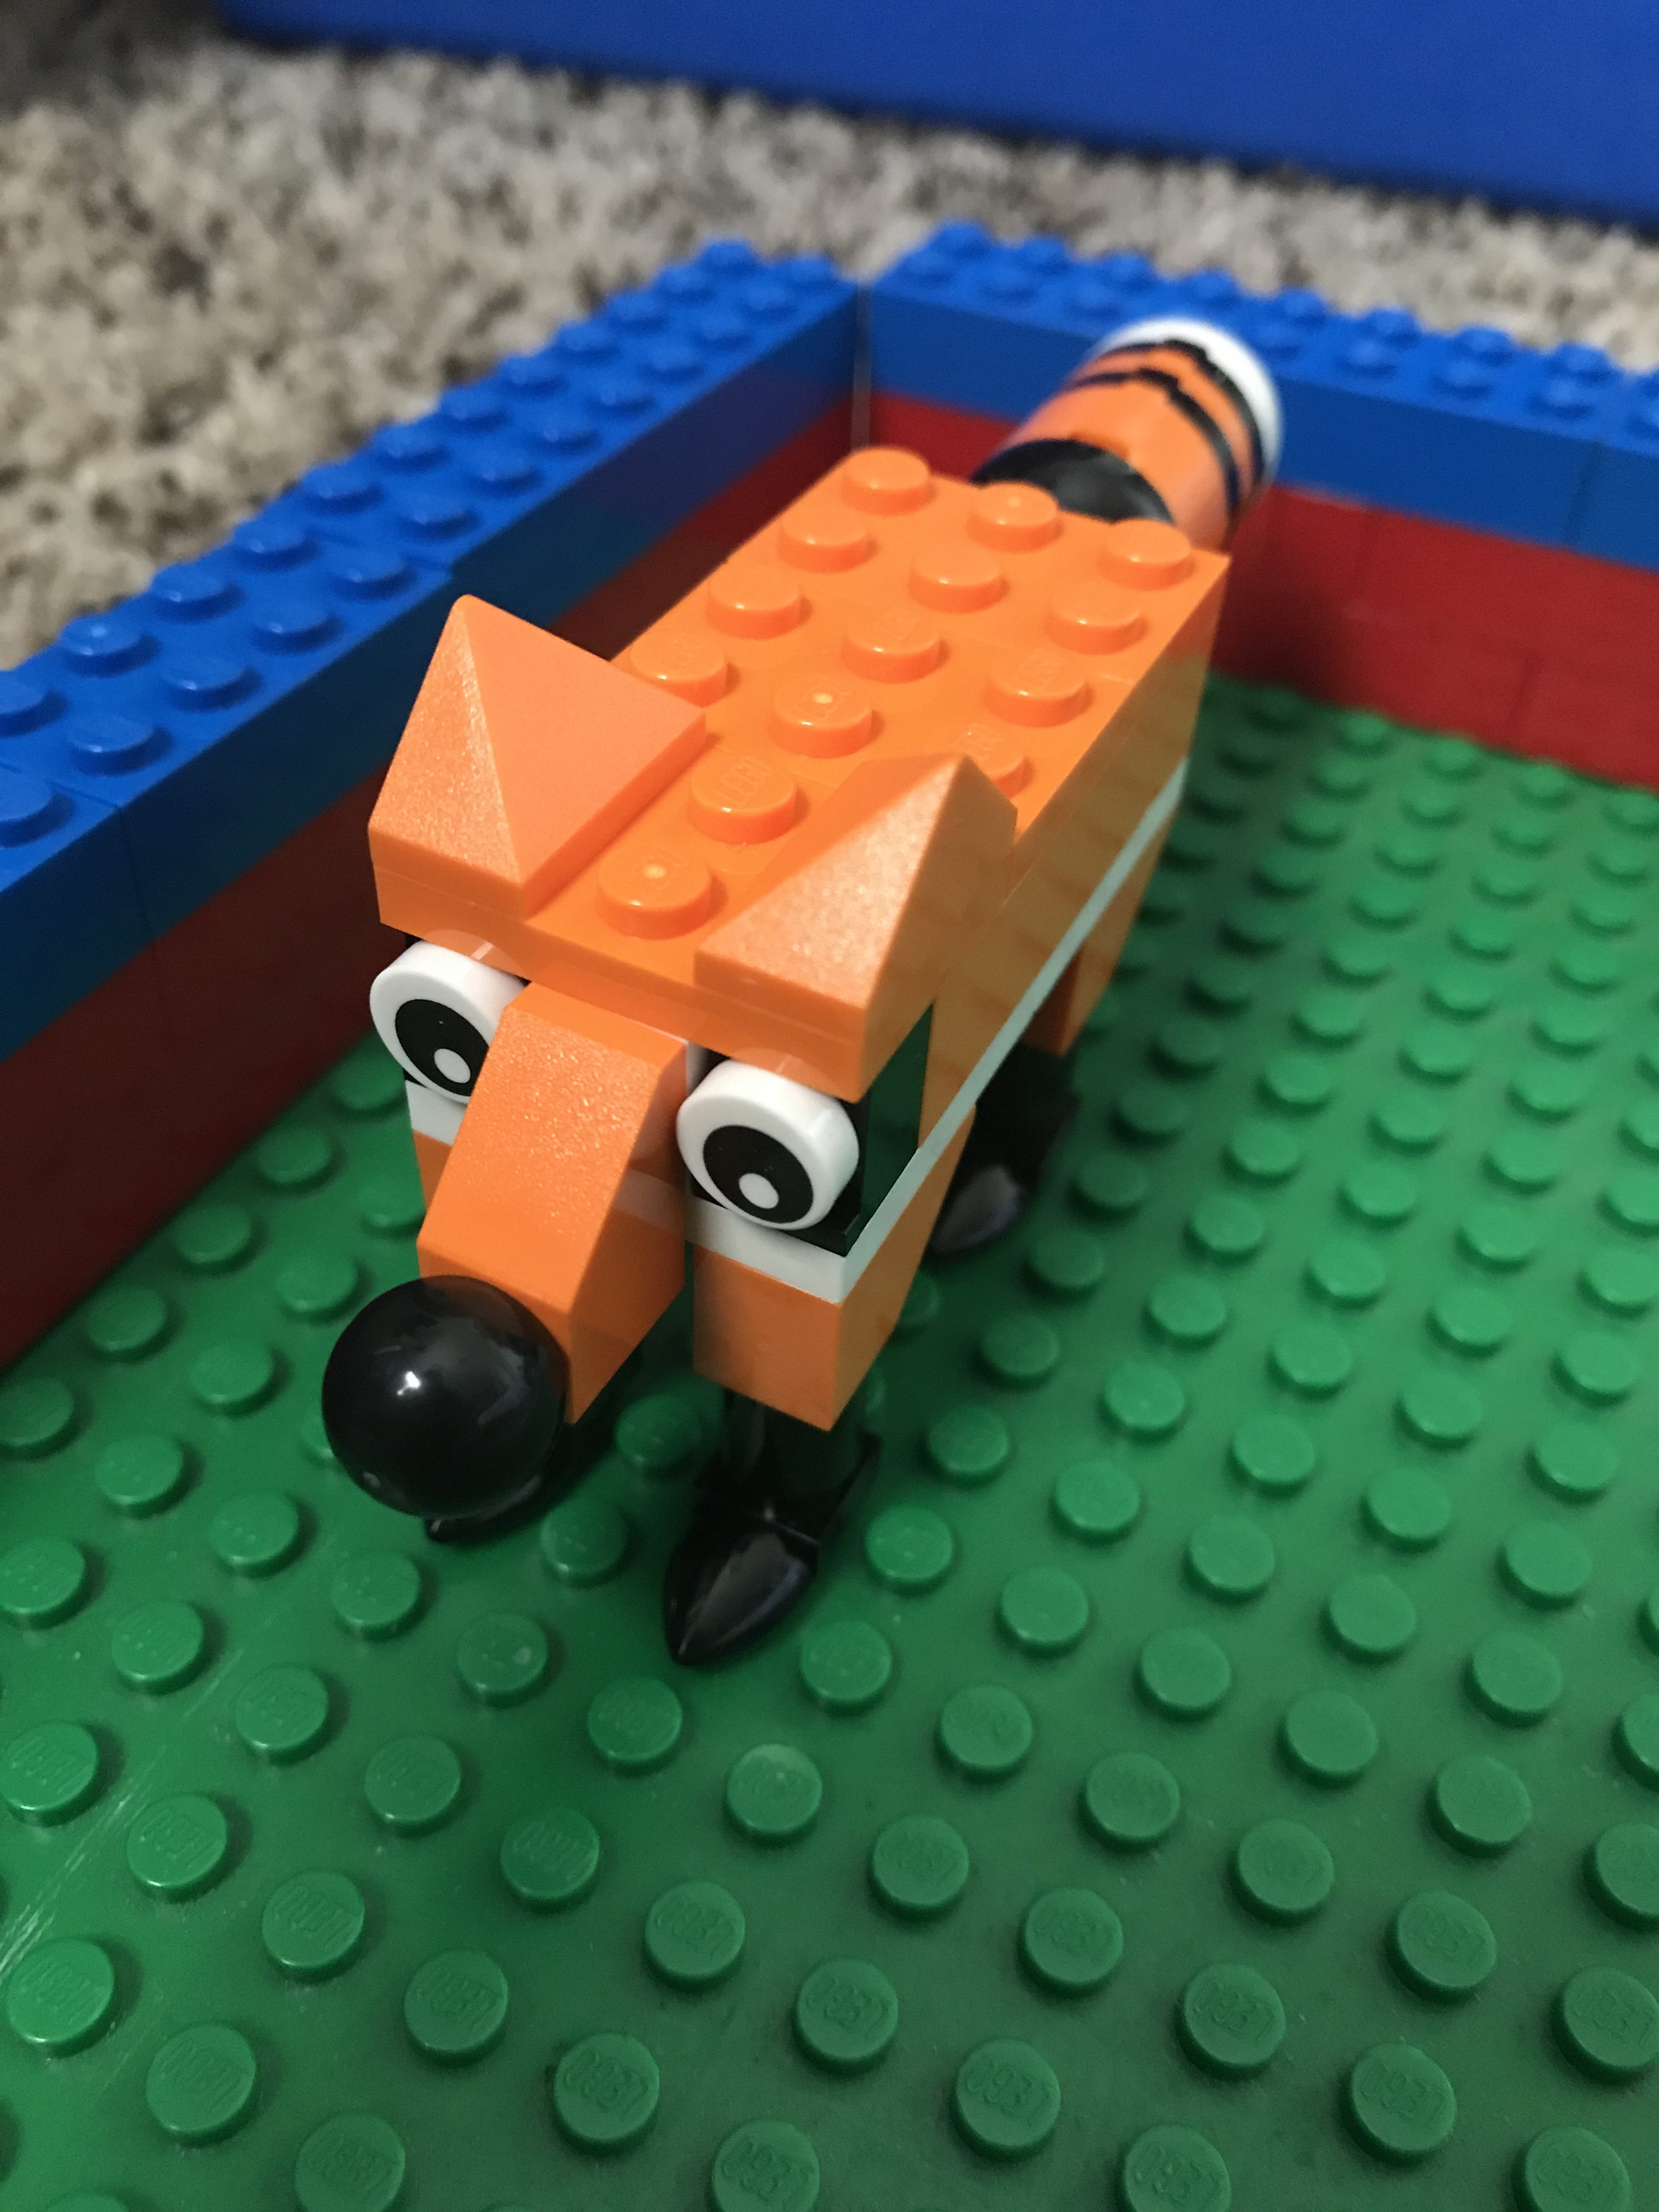 Lego Fox Home Of The Legomaster